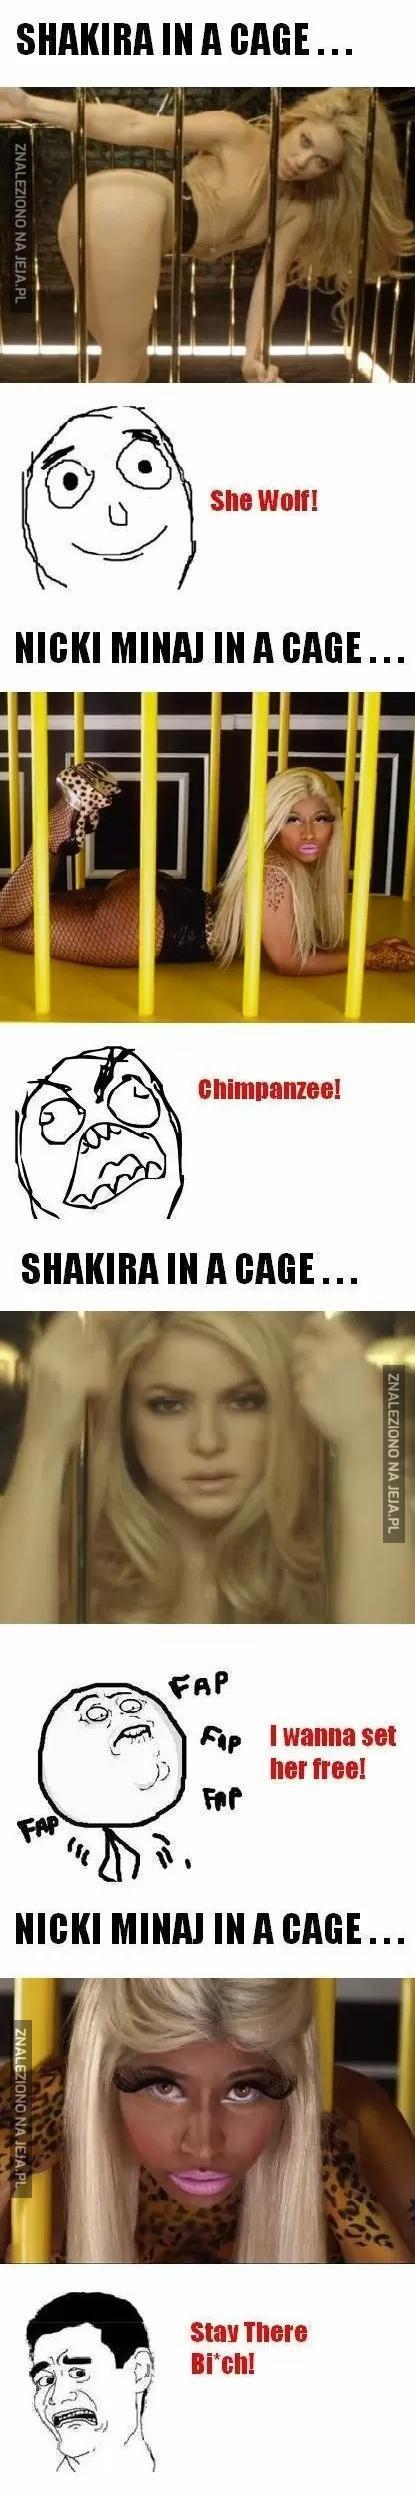 Shakira kontra Nicki Minaj